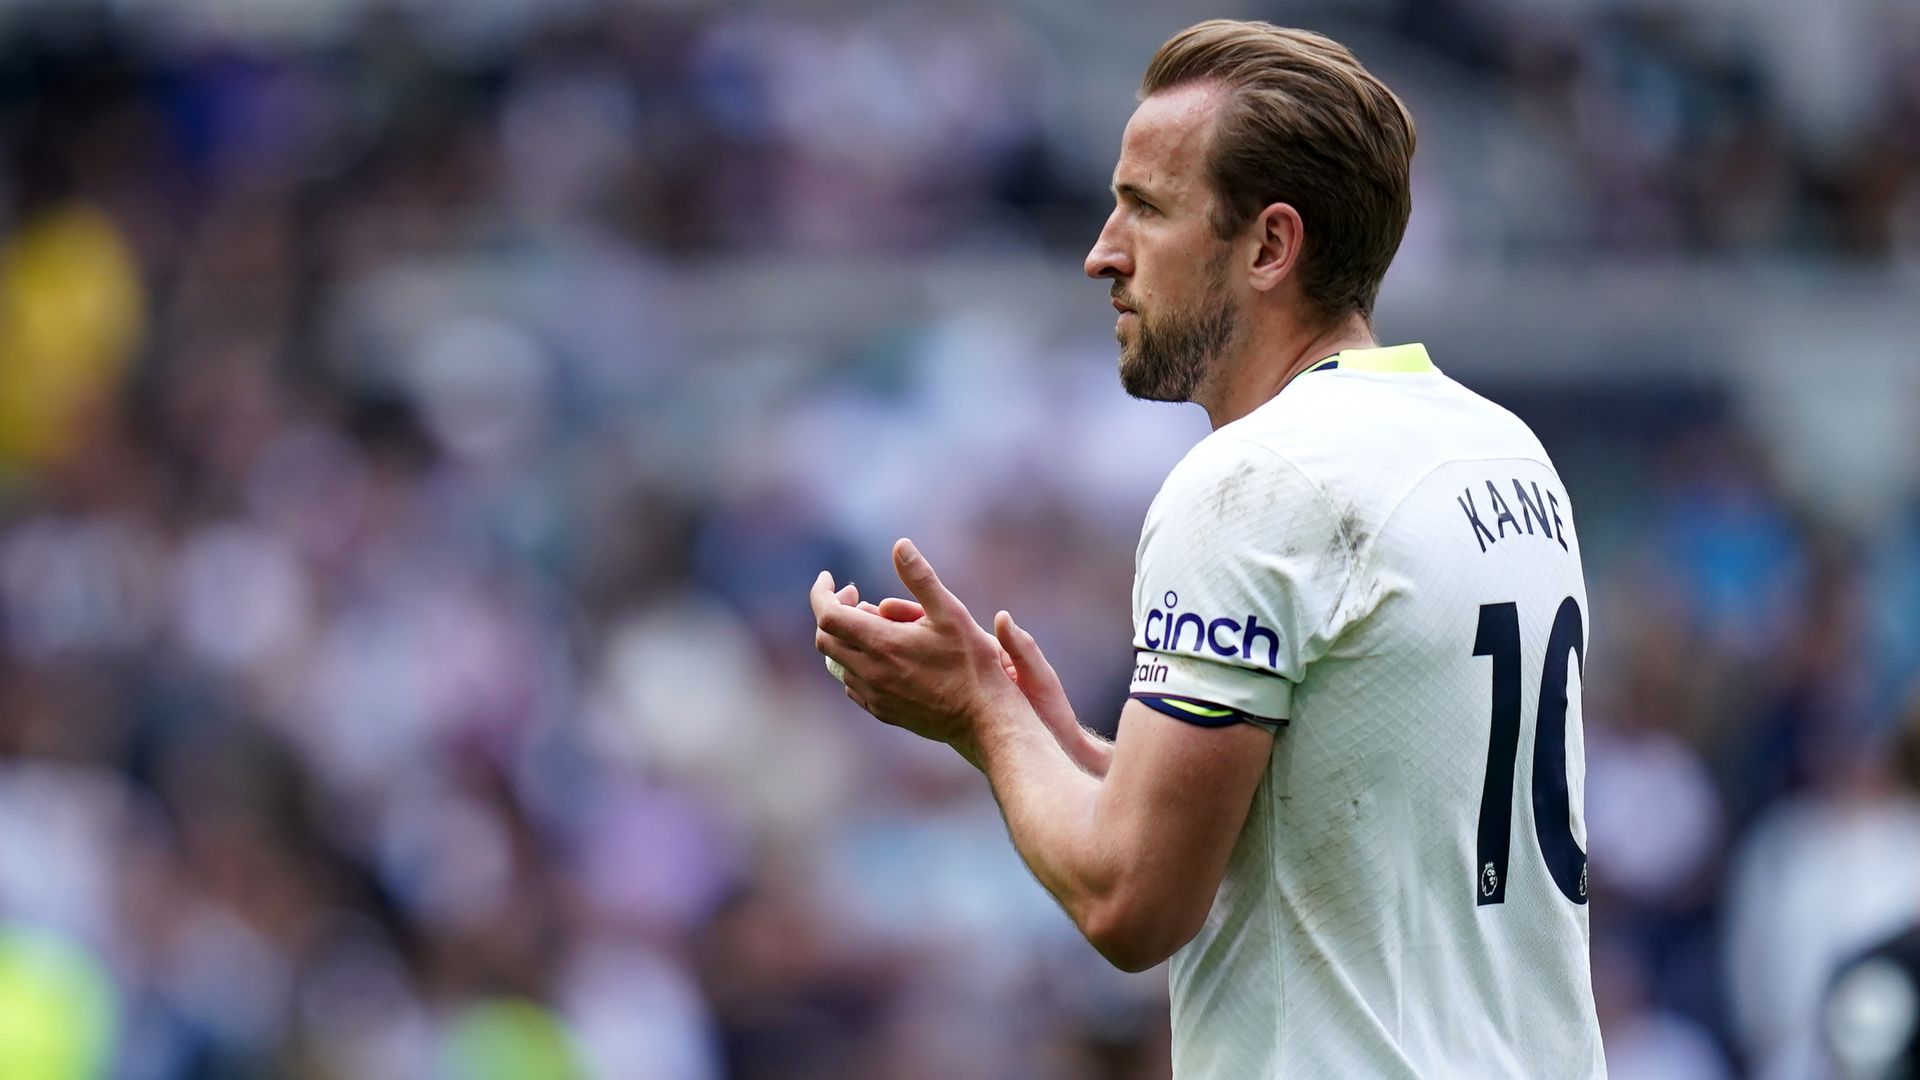 Postecoglou: Kane remains committed to Tottenham